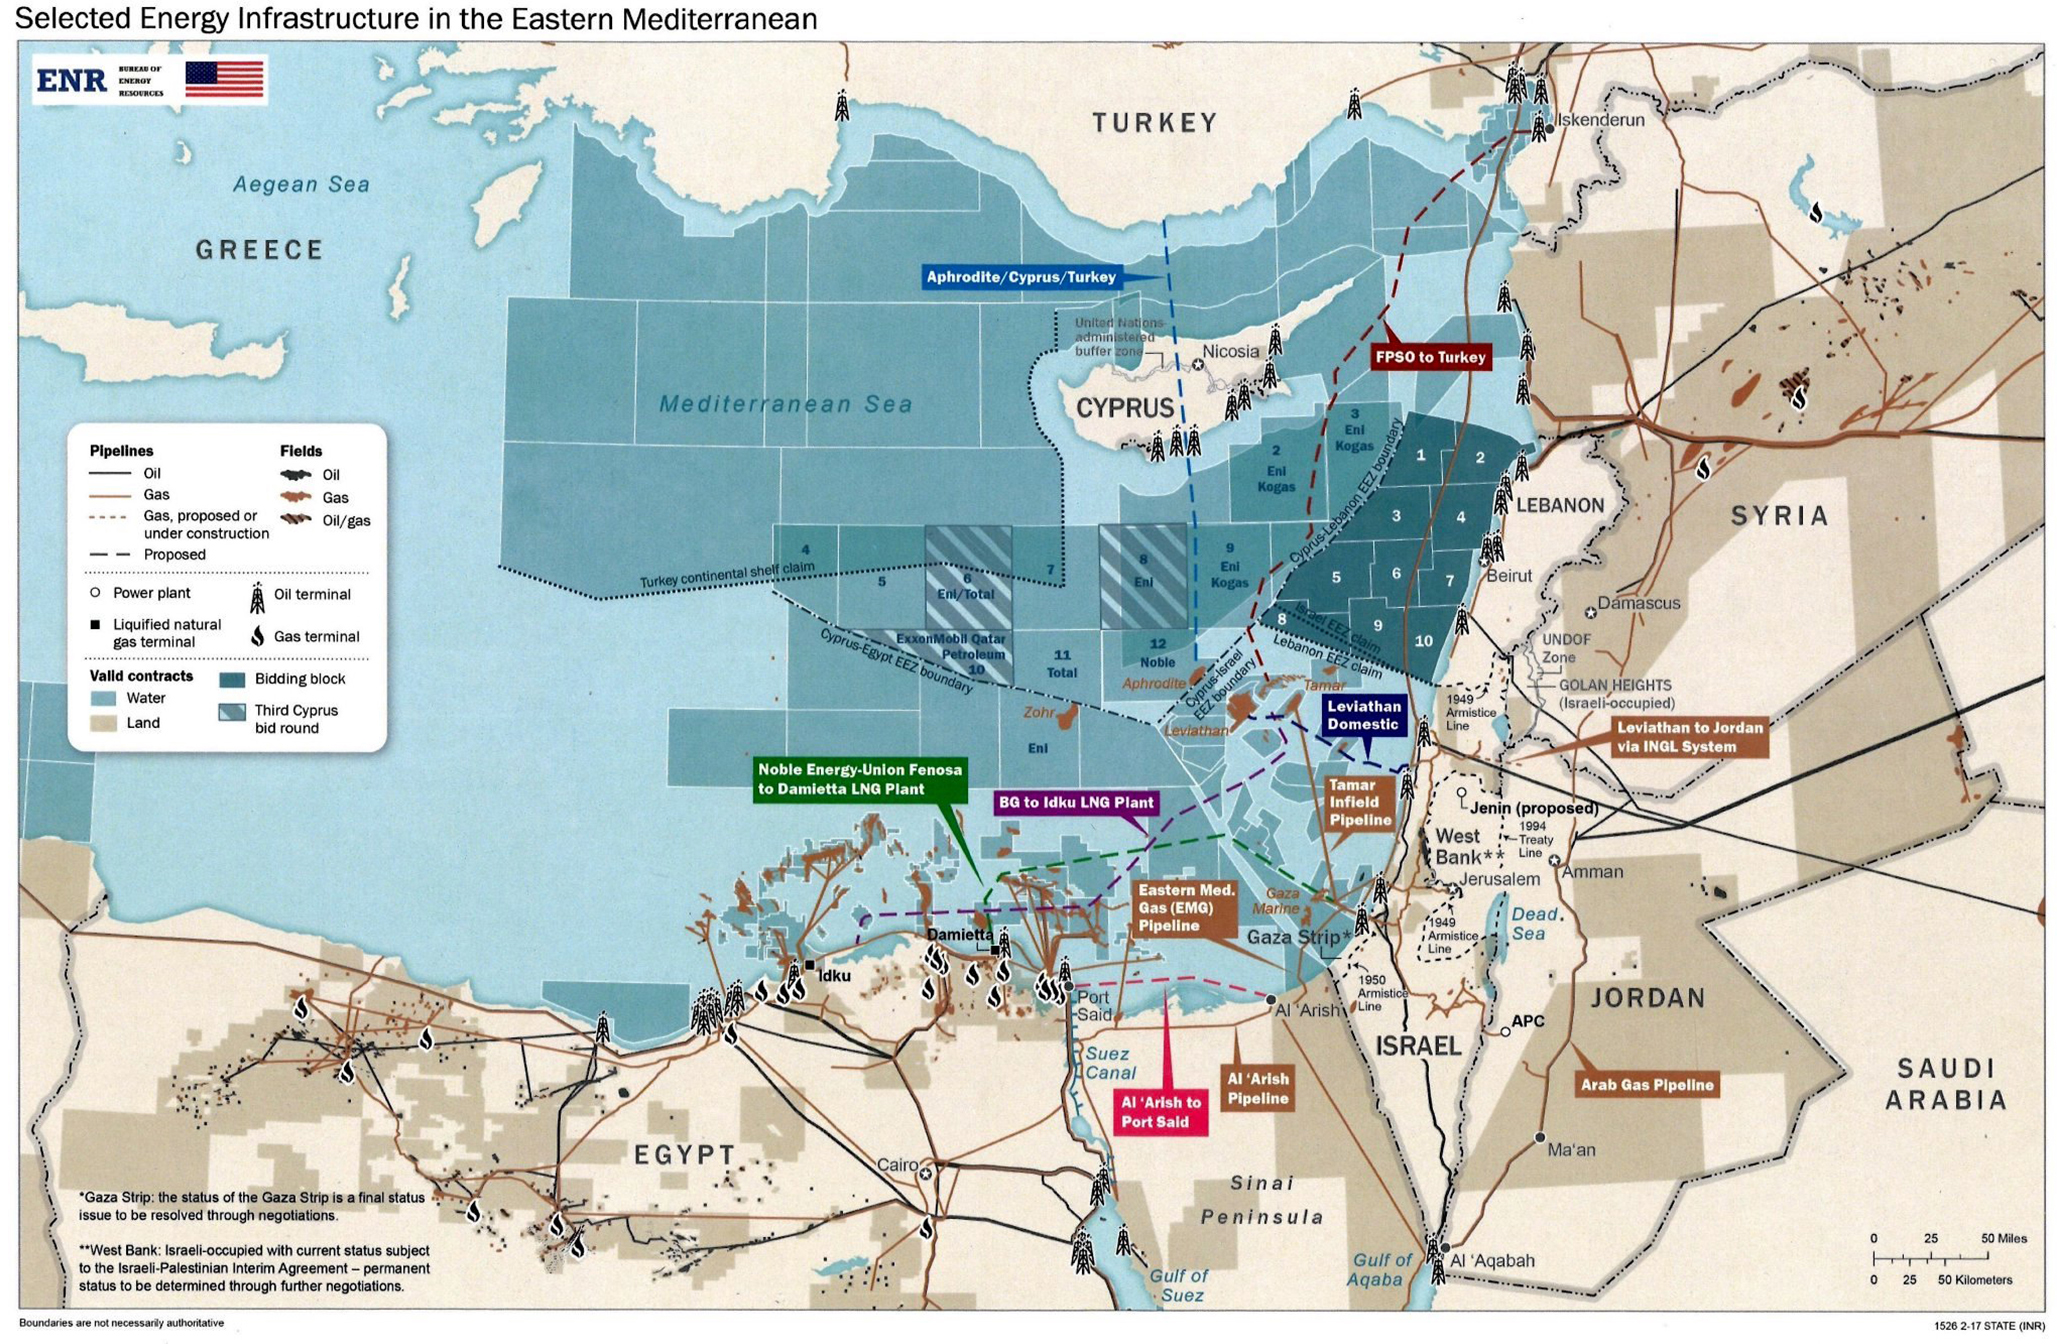 Selected Energy Infrastructure East Mediterranean 2019 21